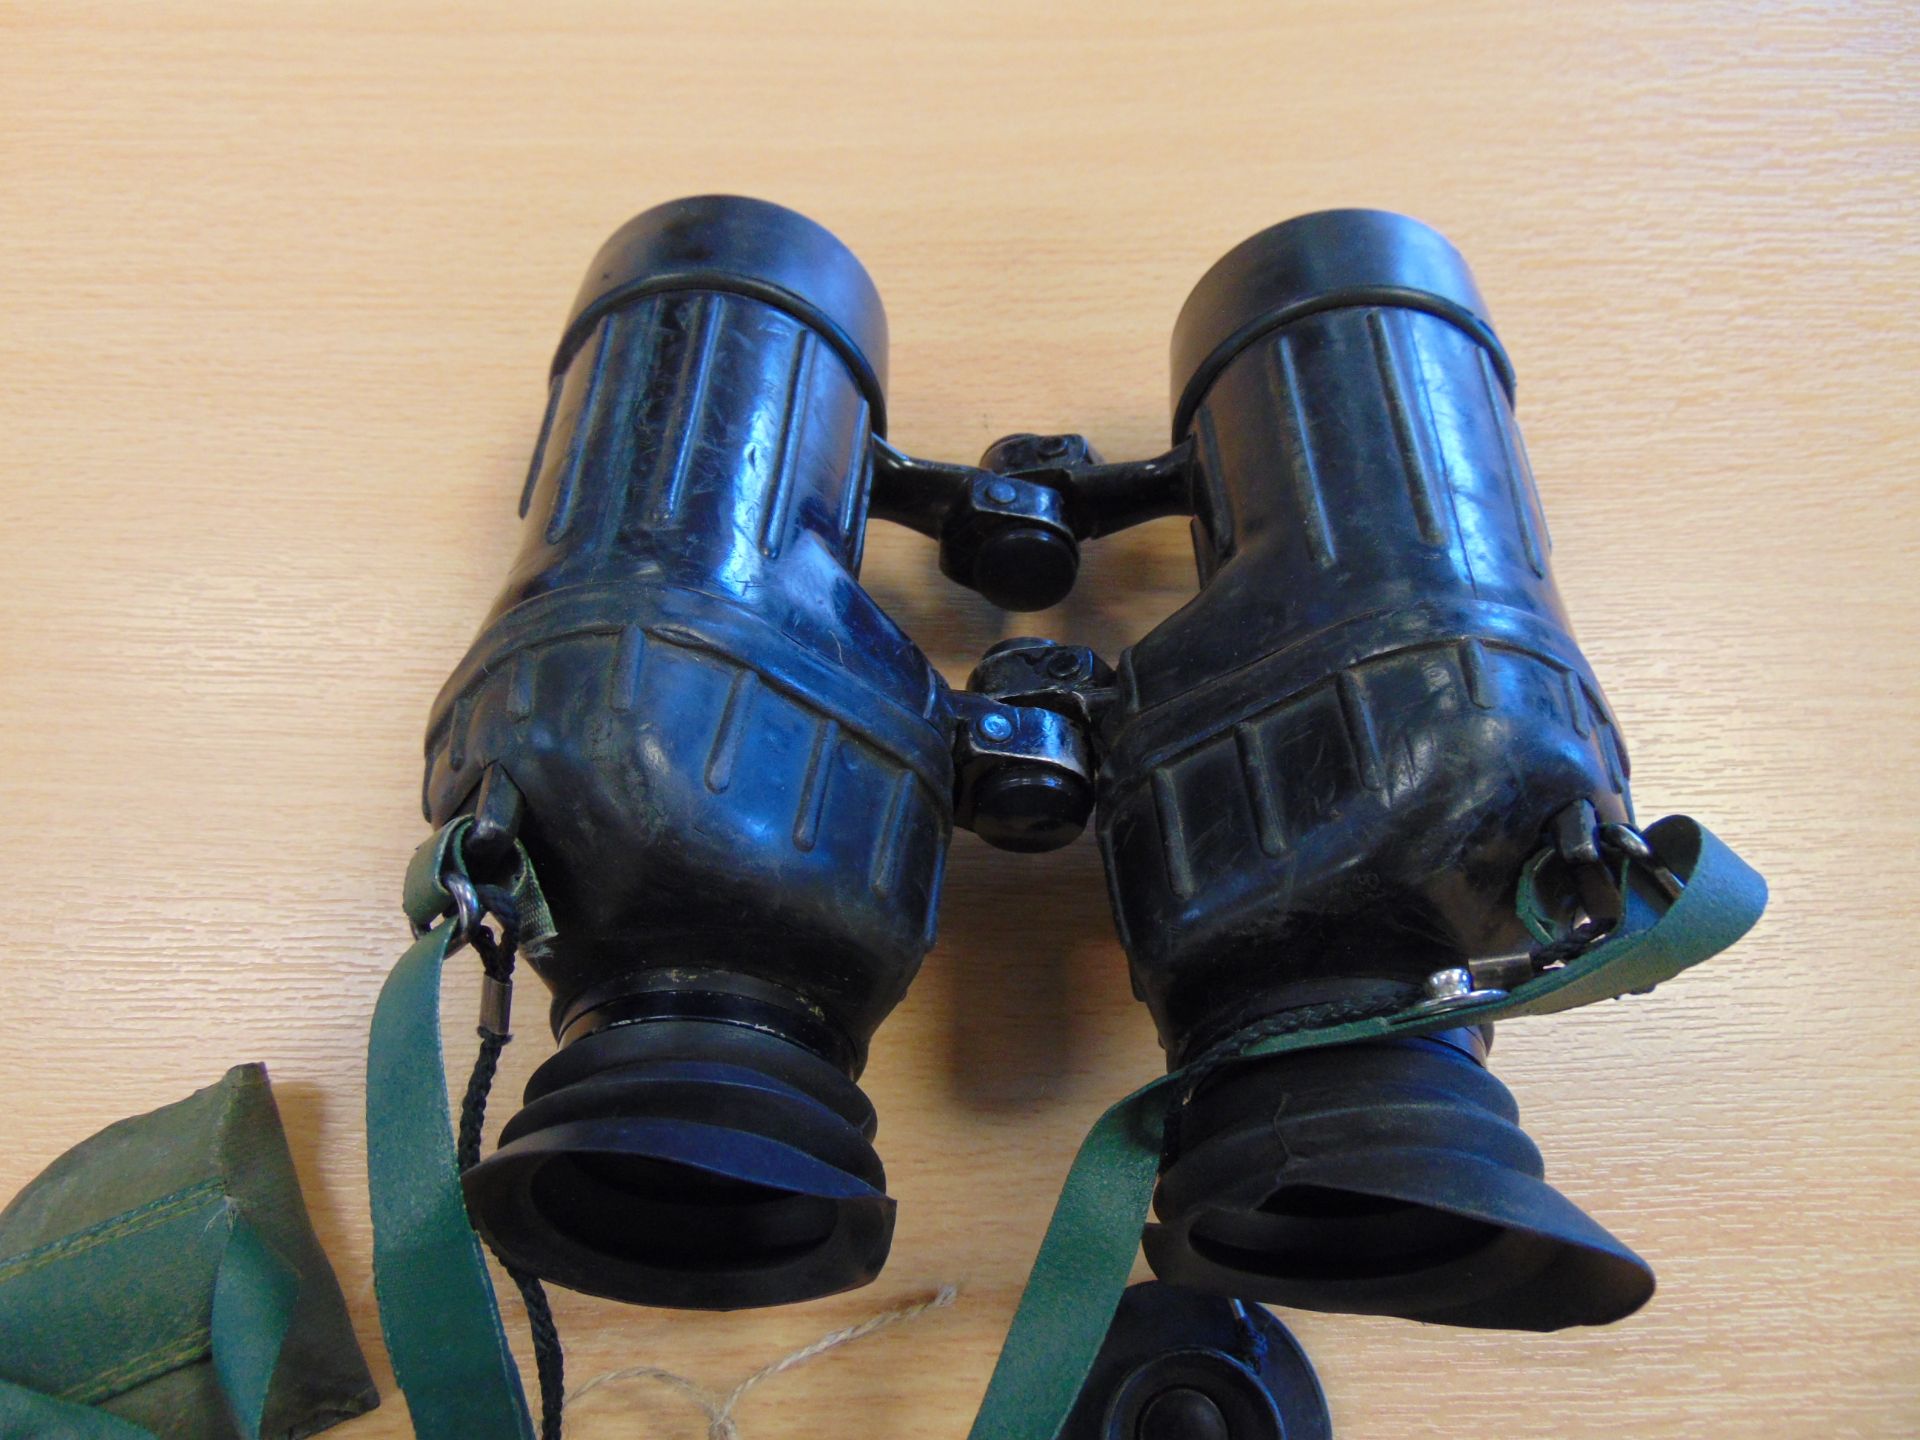 AVIMO L12A1 7x42 British Army Water Proof Self Focusing Binos c/w Filters etc - Bild 4 aus 7